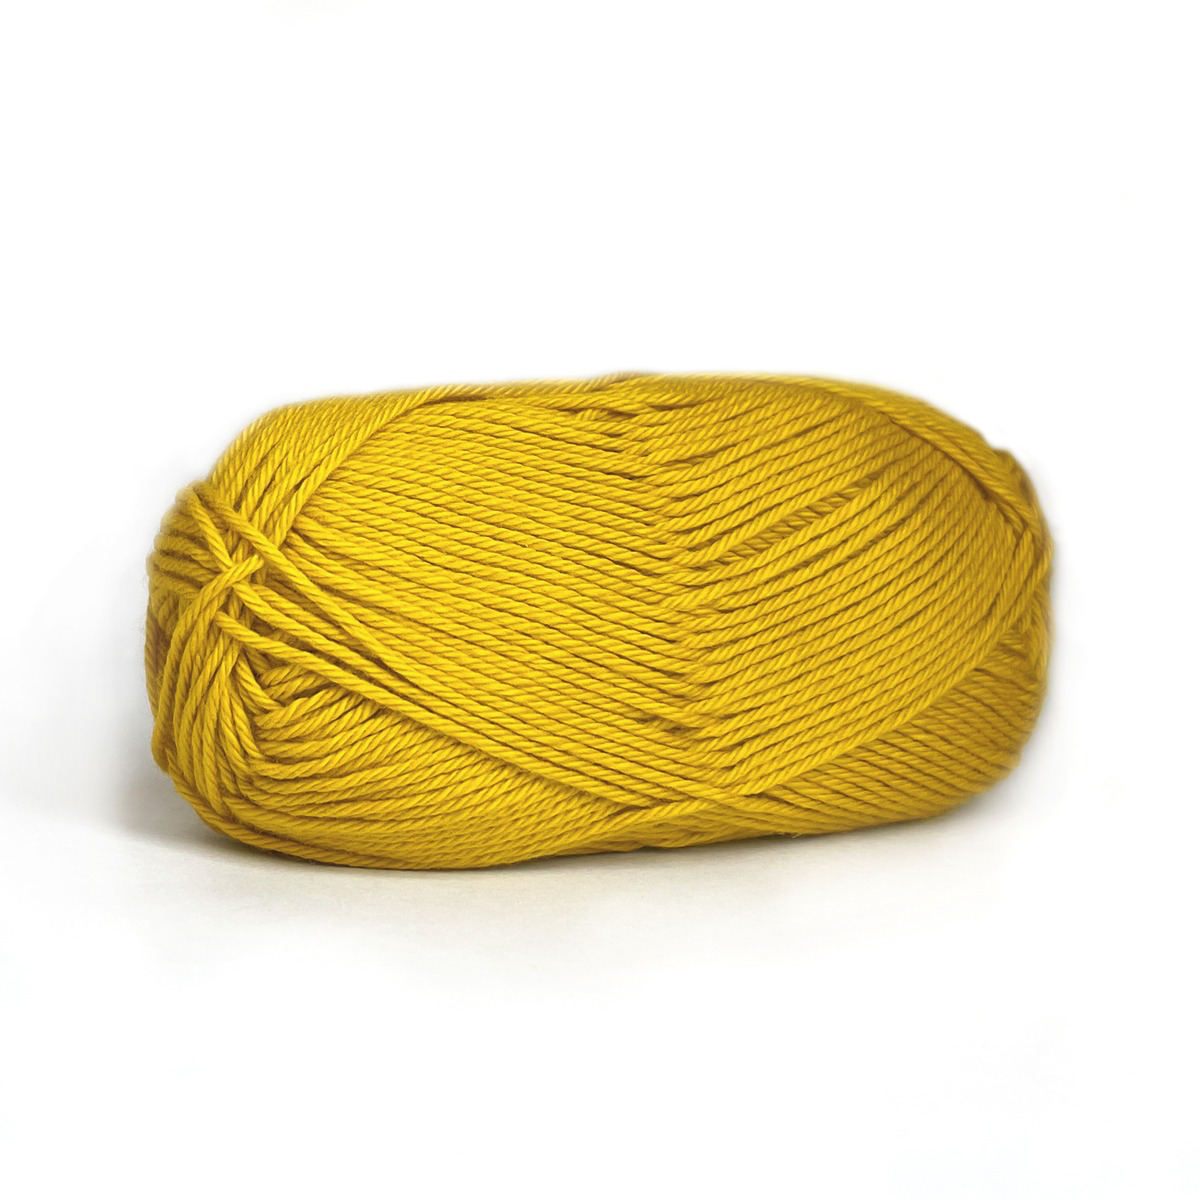 Kelbourne Woolens Yarn skipper sulfur yellow